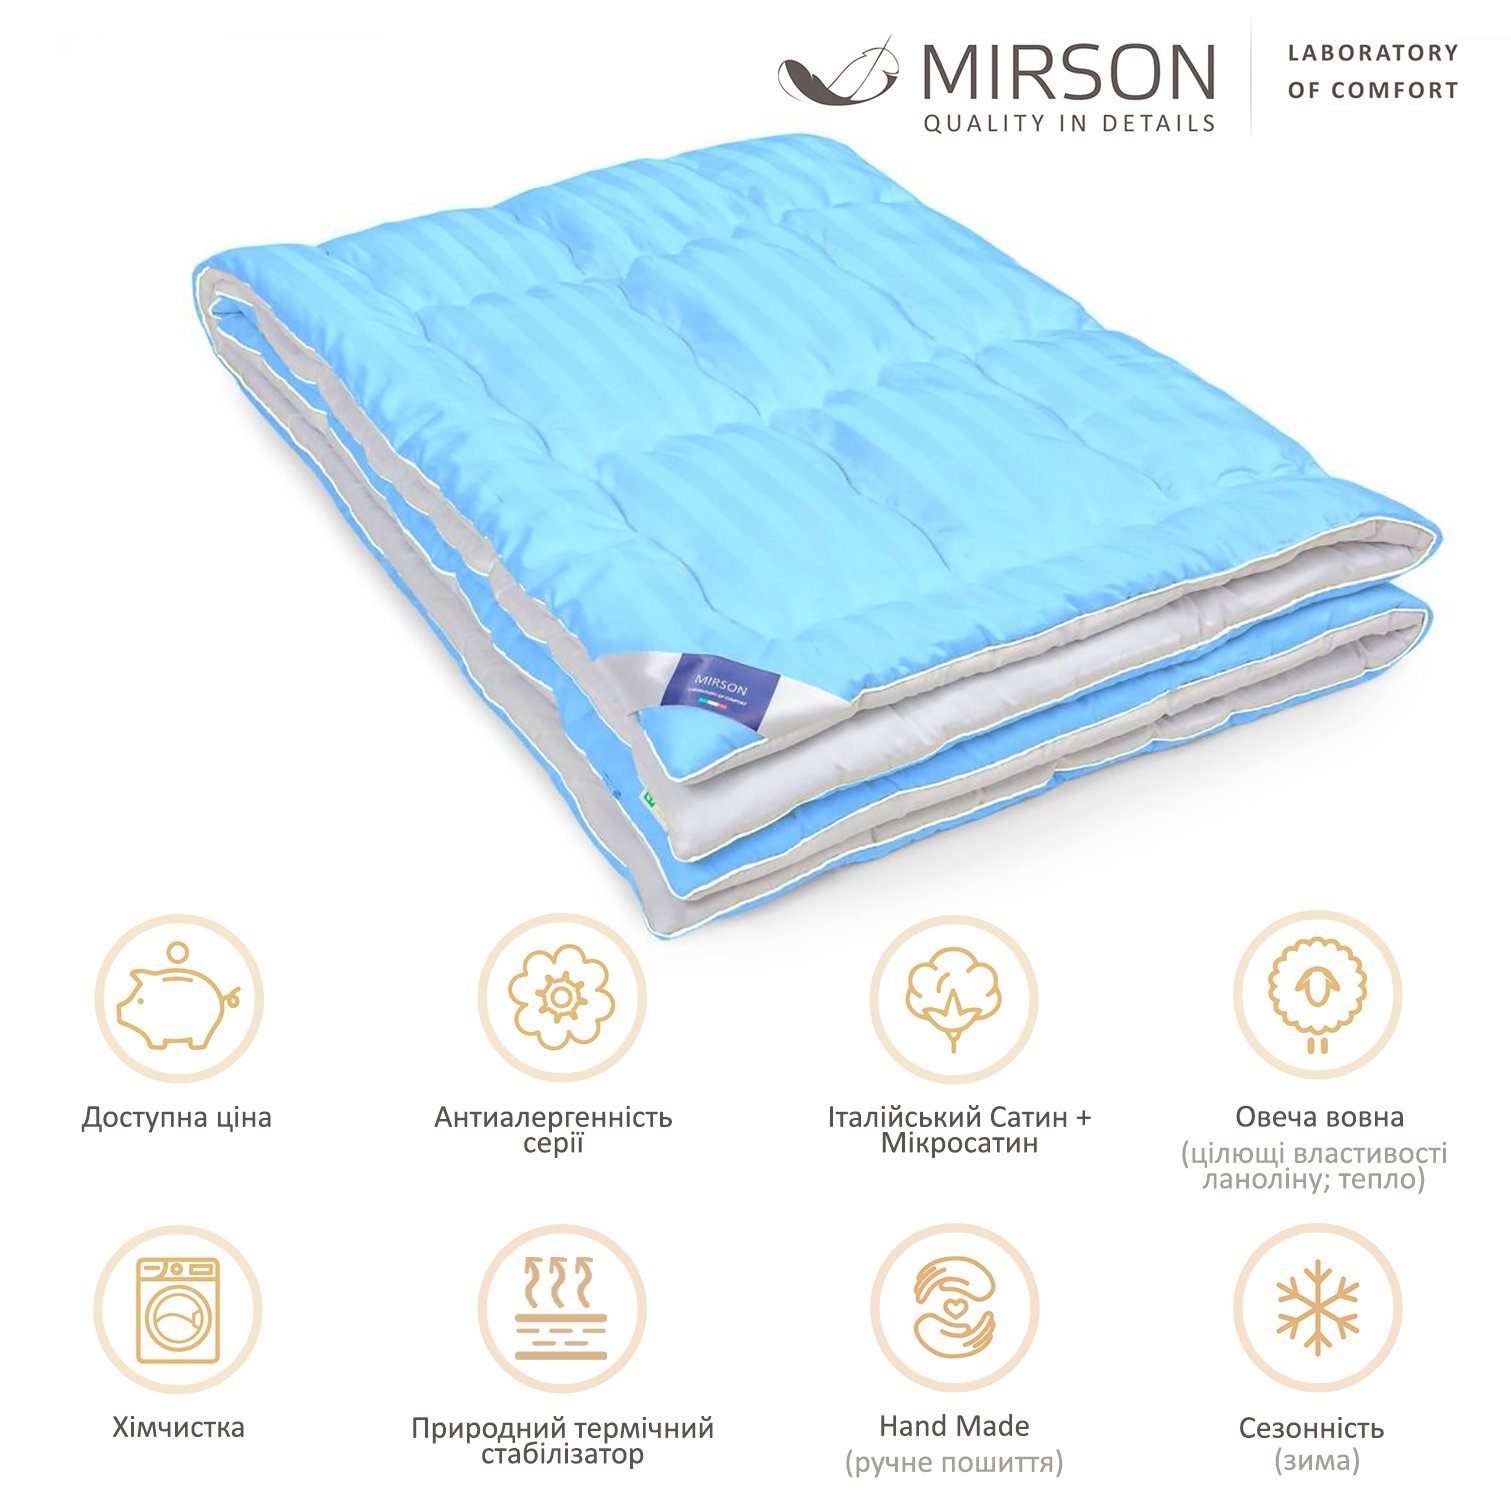 Одеяло шерстяное MirSon Valentino Hand Made №1356, зимнее, 200x220 см, бело-голубое - фото 5